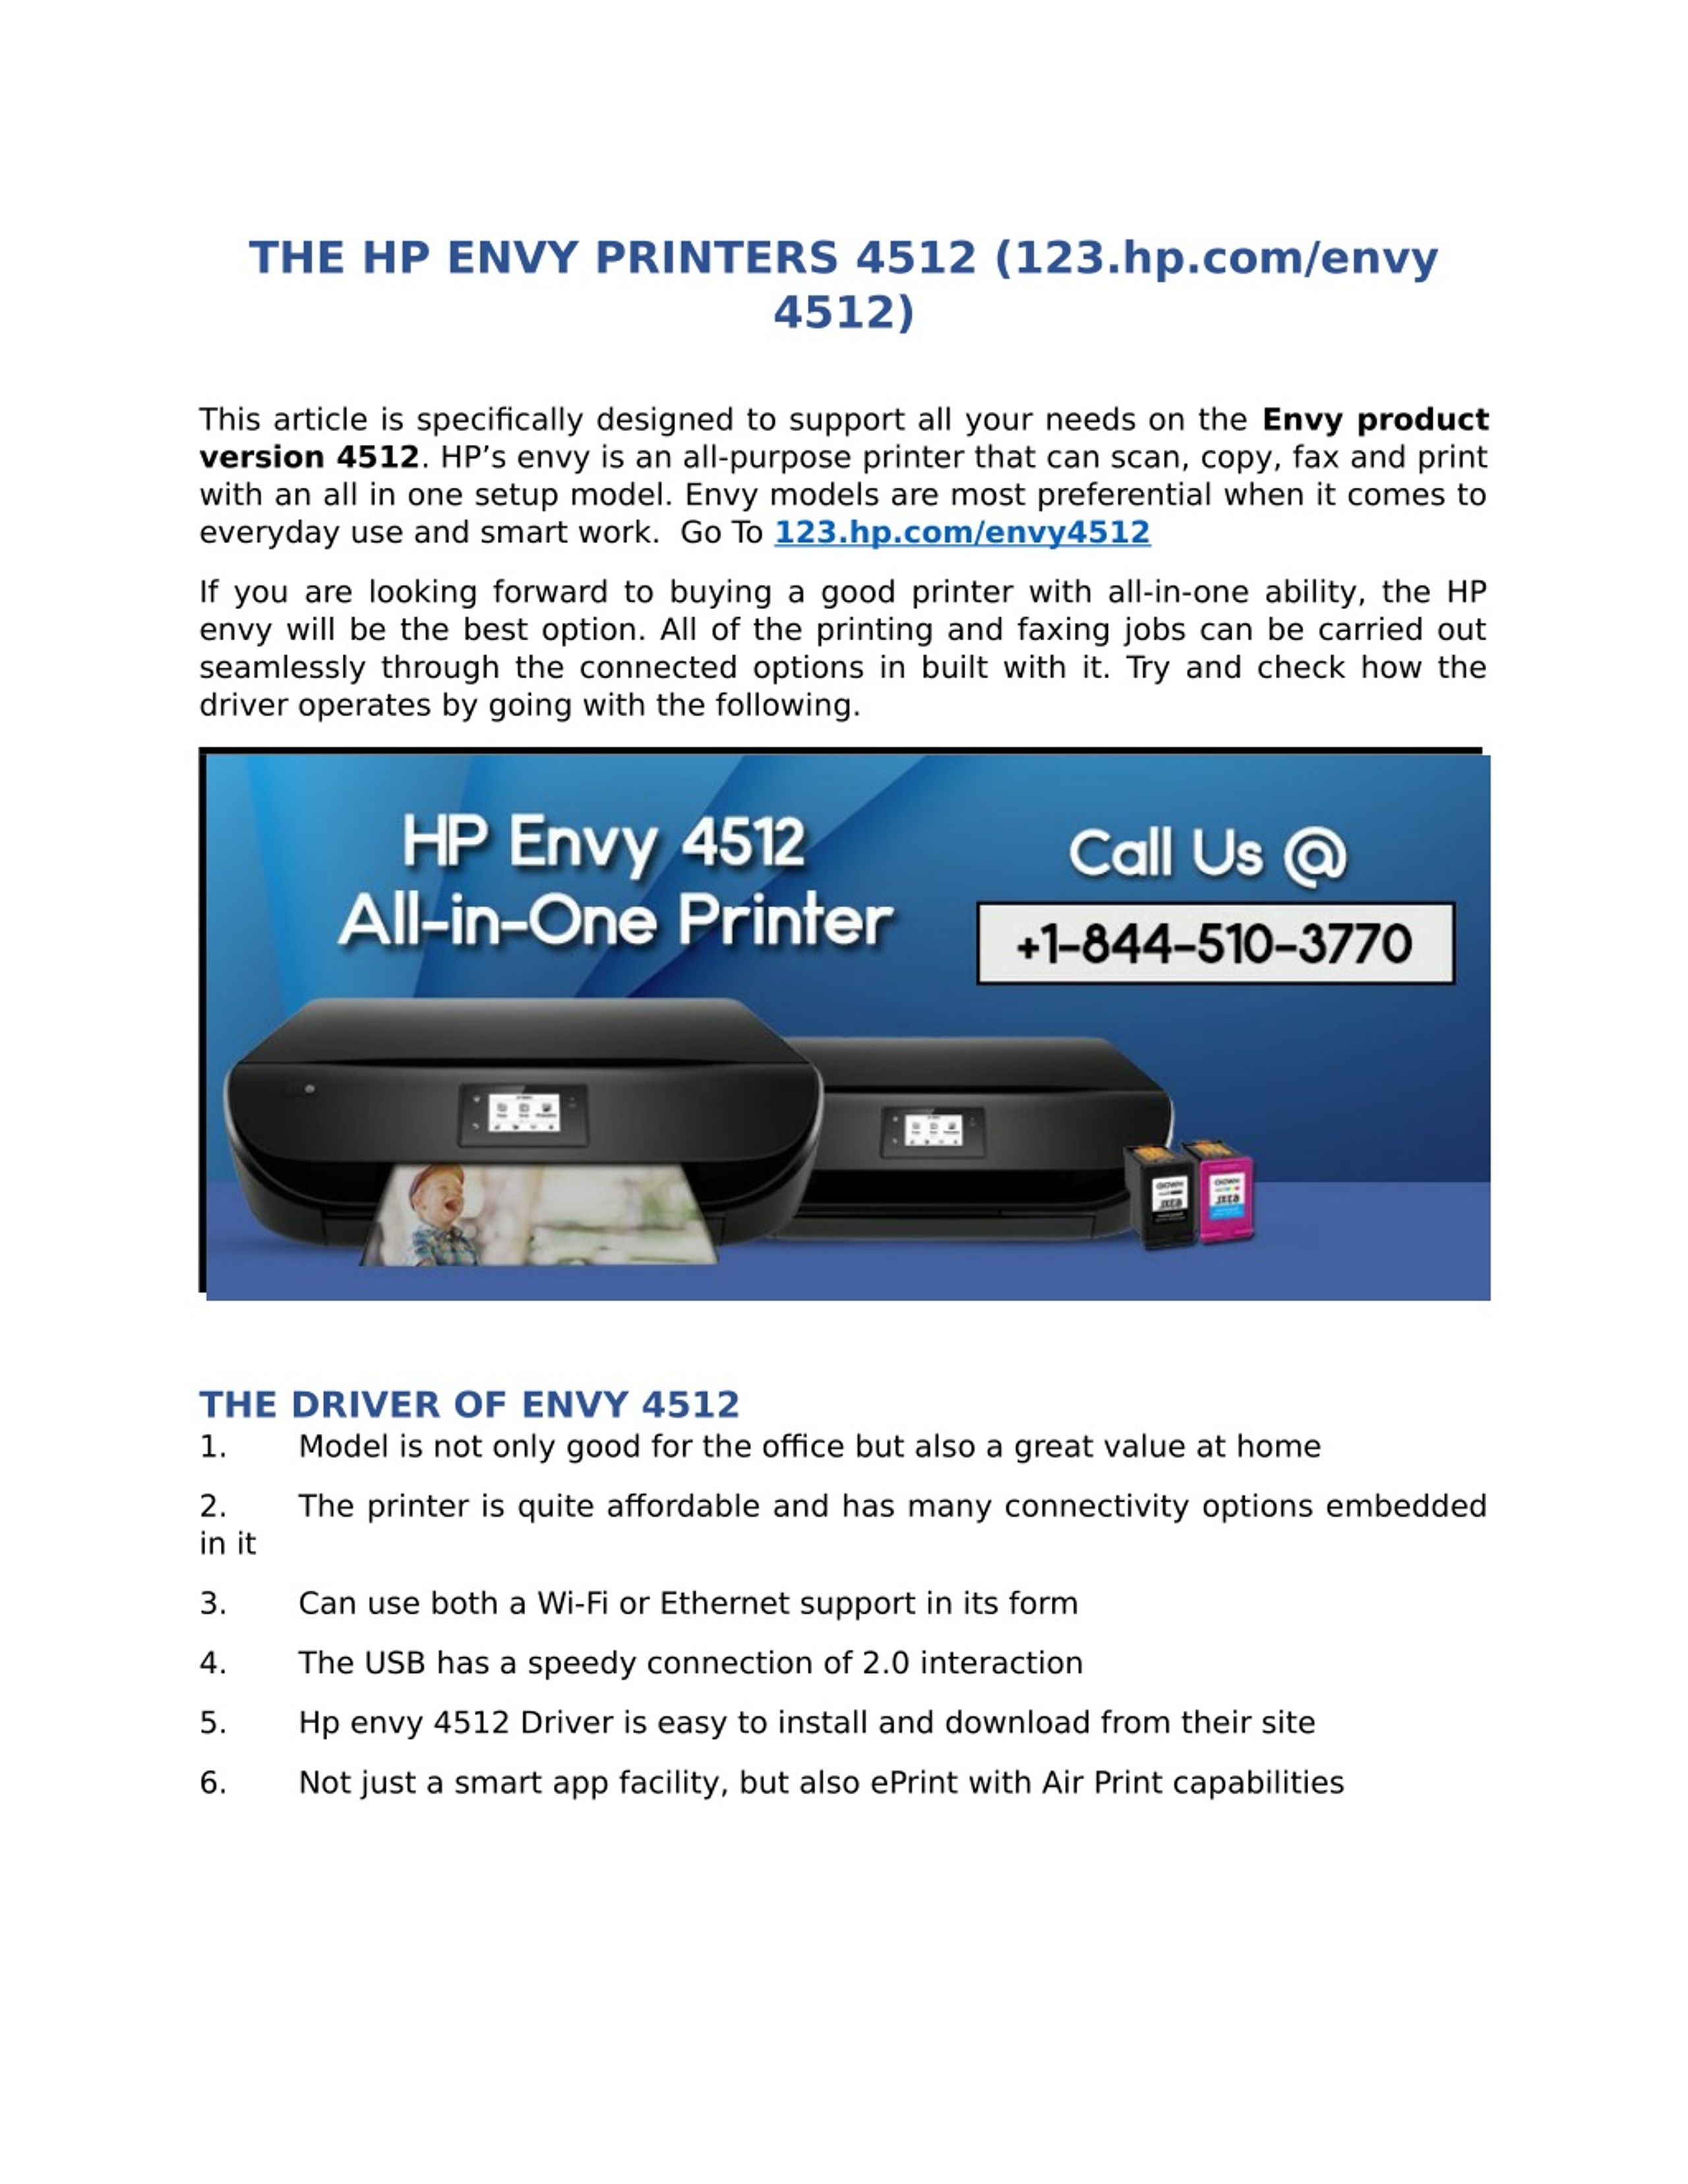 Ppt Hp Envy 4512 Printer Setup And Installation Envy 4512 Powerpoint Presentation 1875